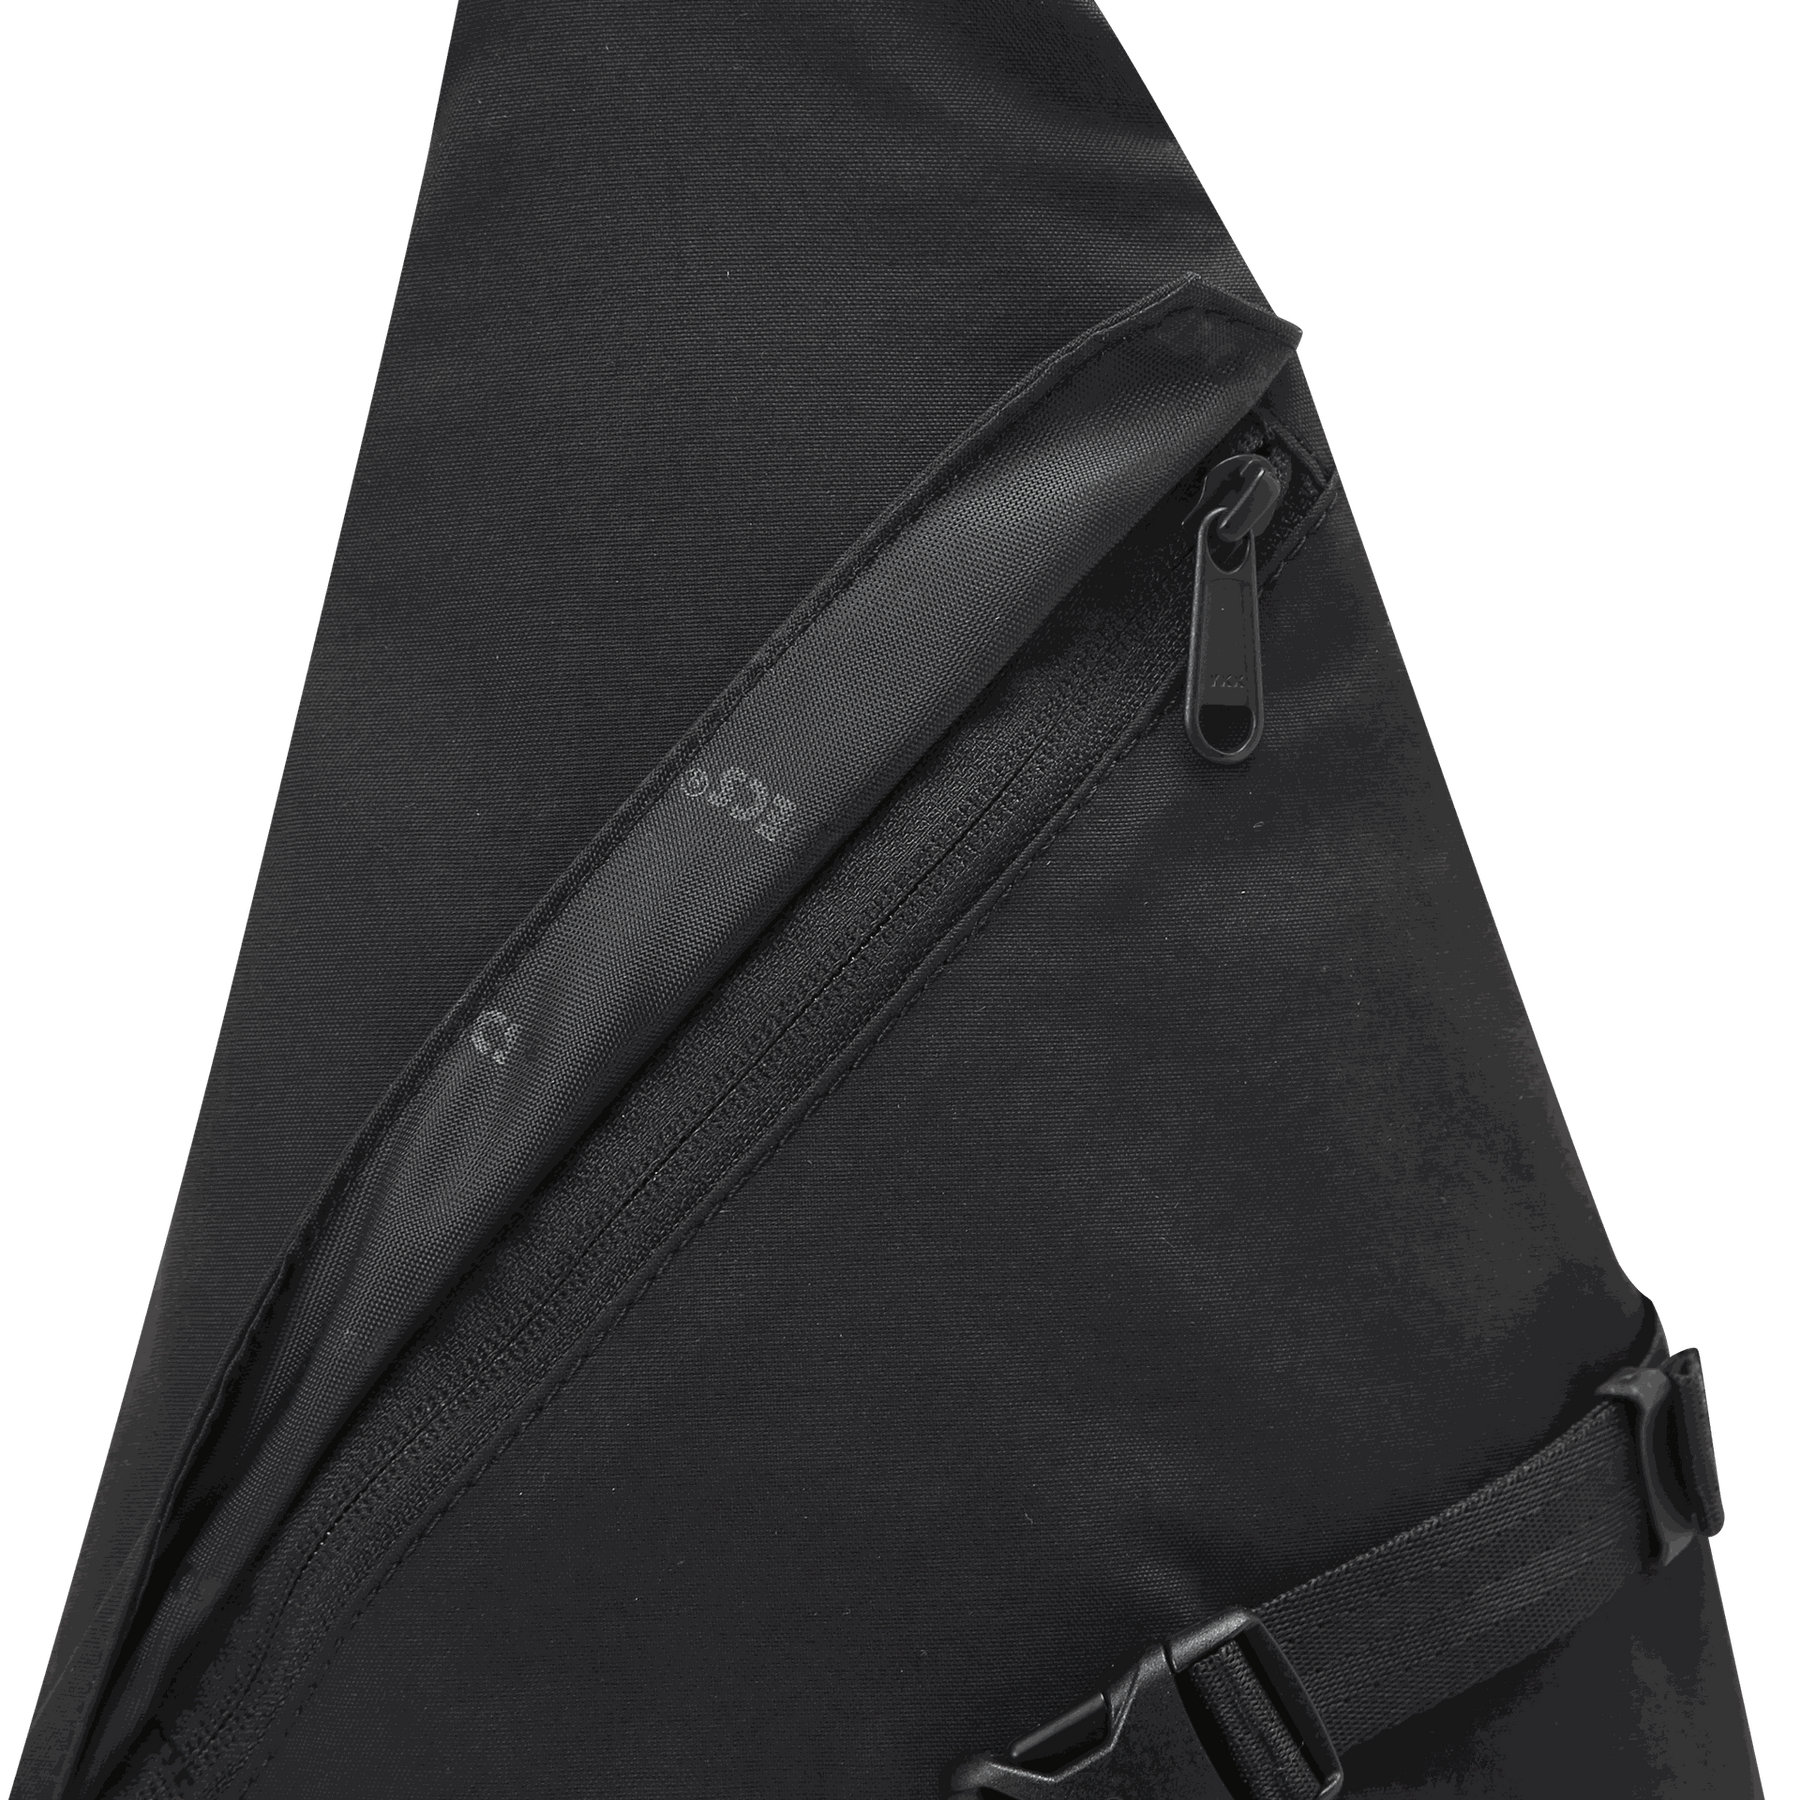 T-traxx Black Sling Bag bagcbtt60a black_01 - Price in India | Flipkart.com